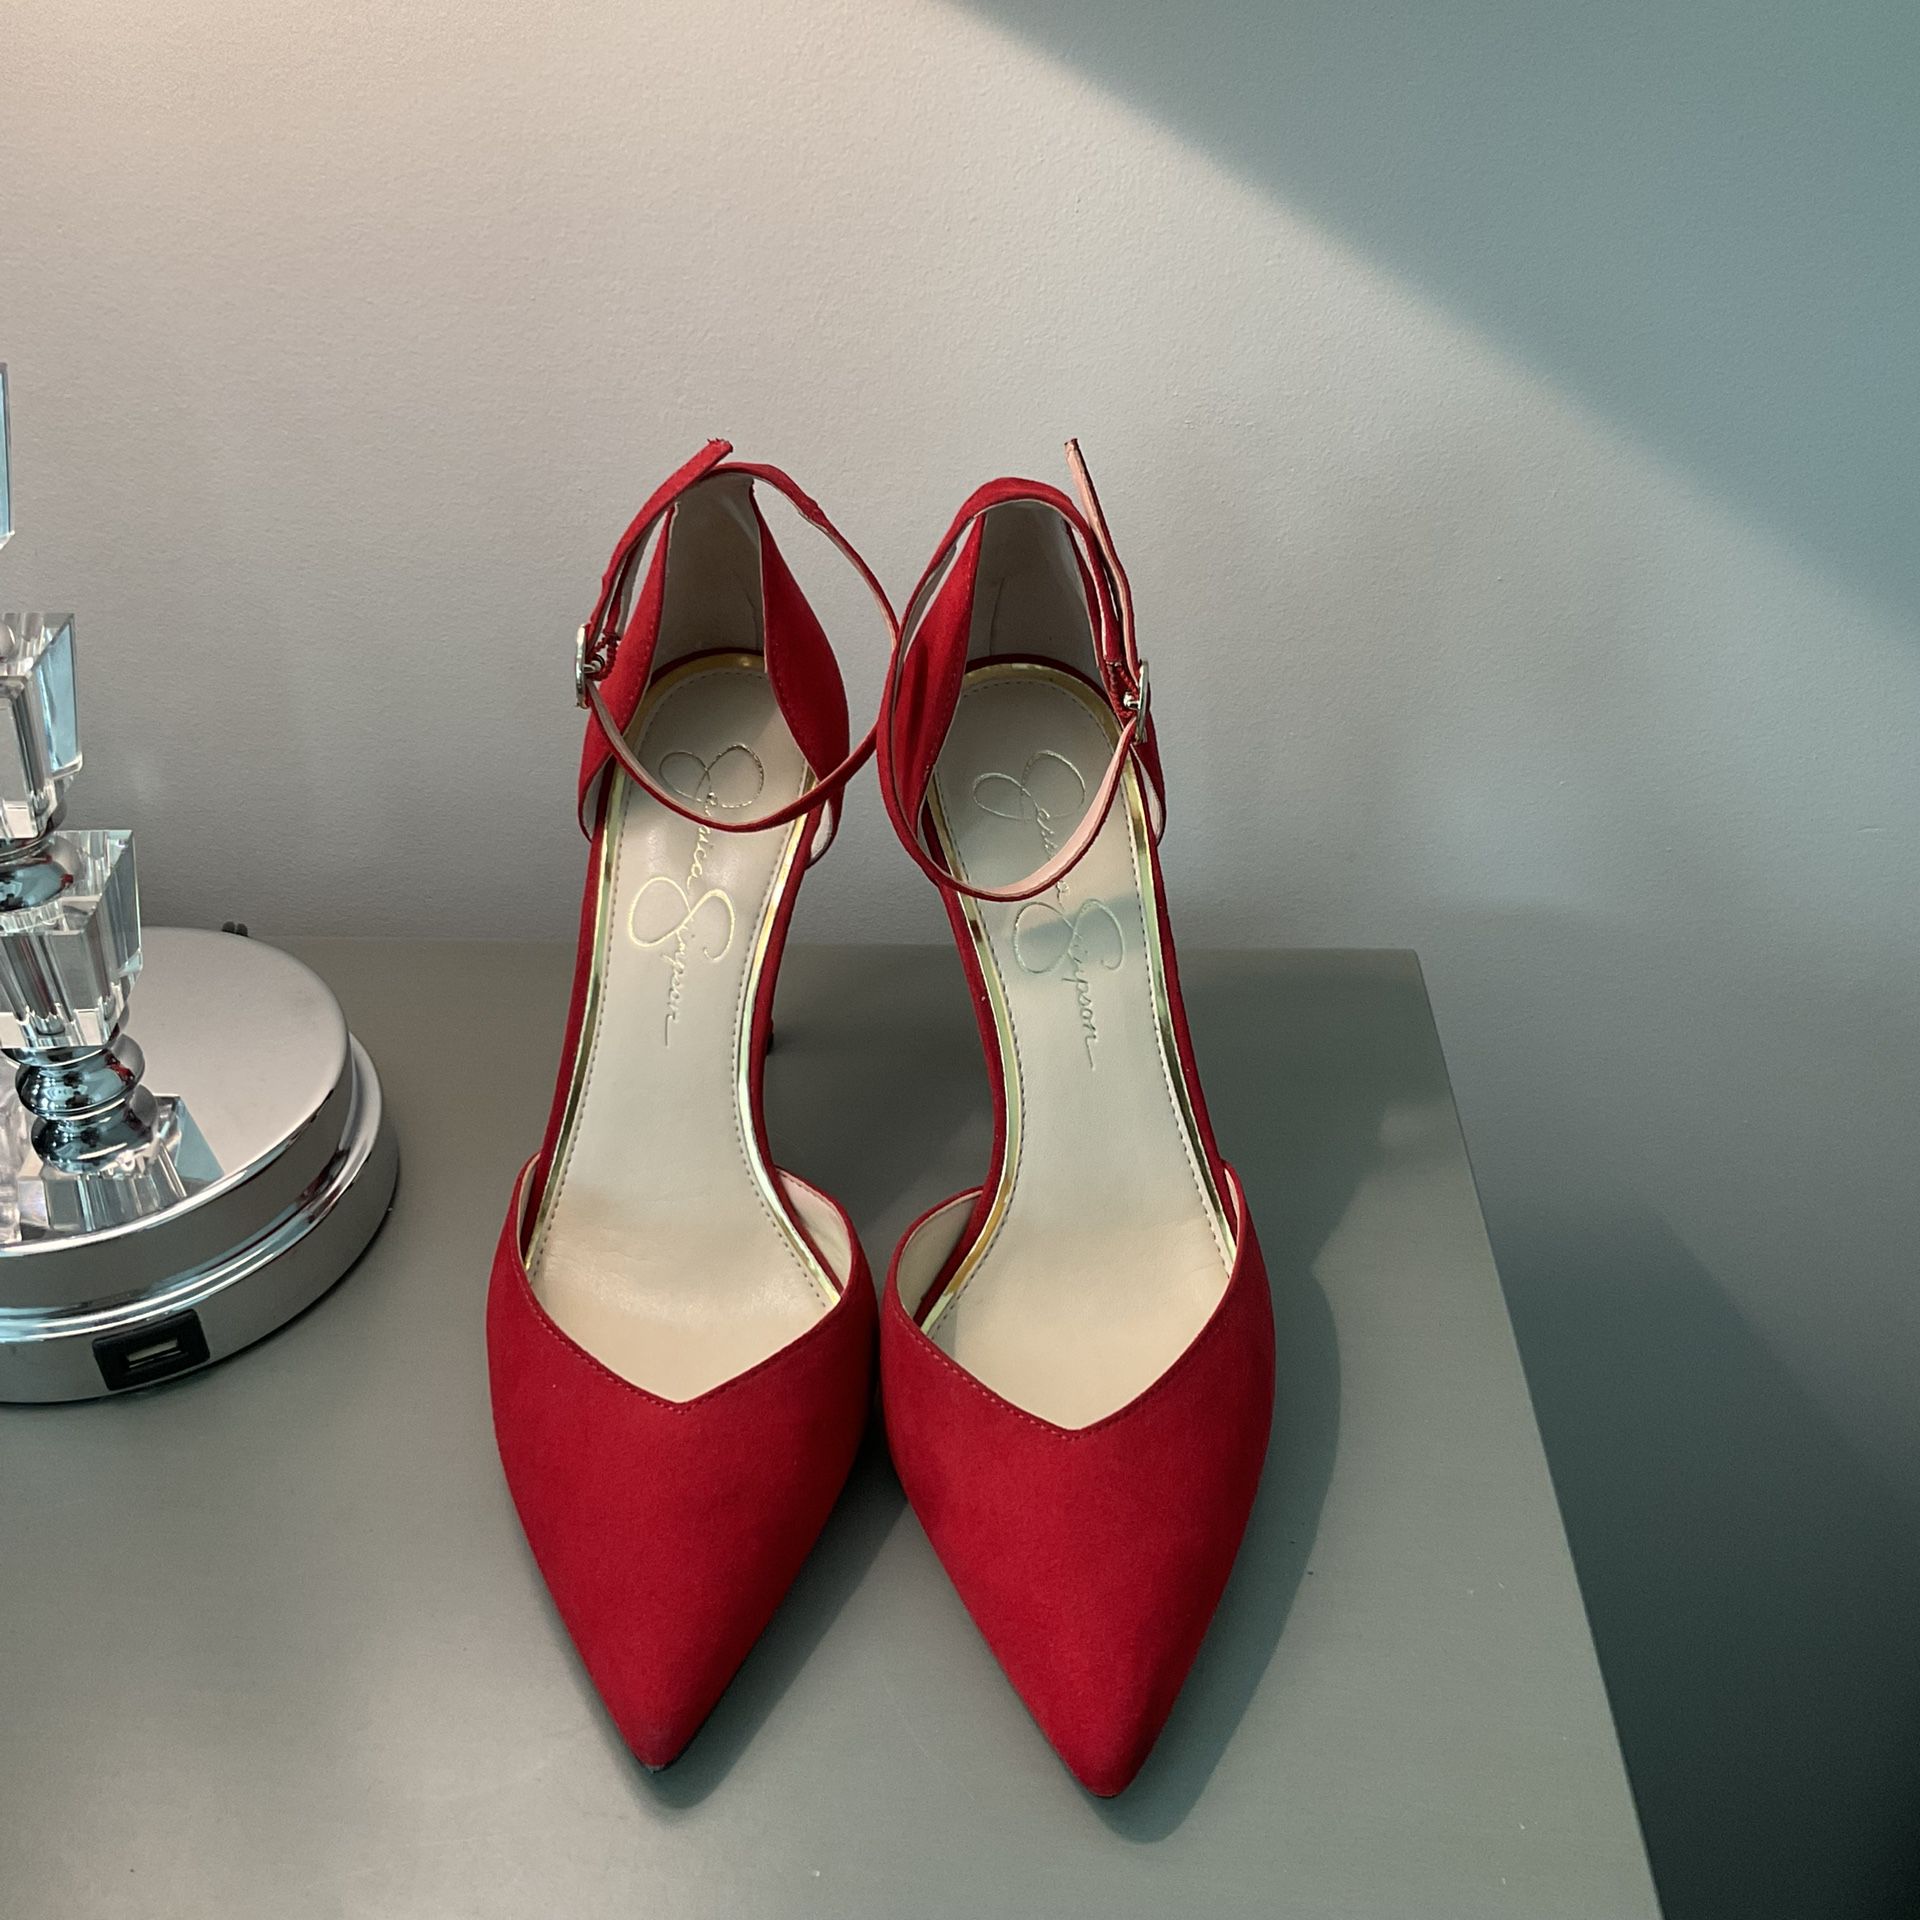 Jessica Simpson Ankle Strap Red Stiletto Dress Pumps Size 8